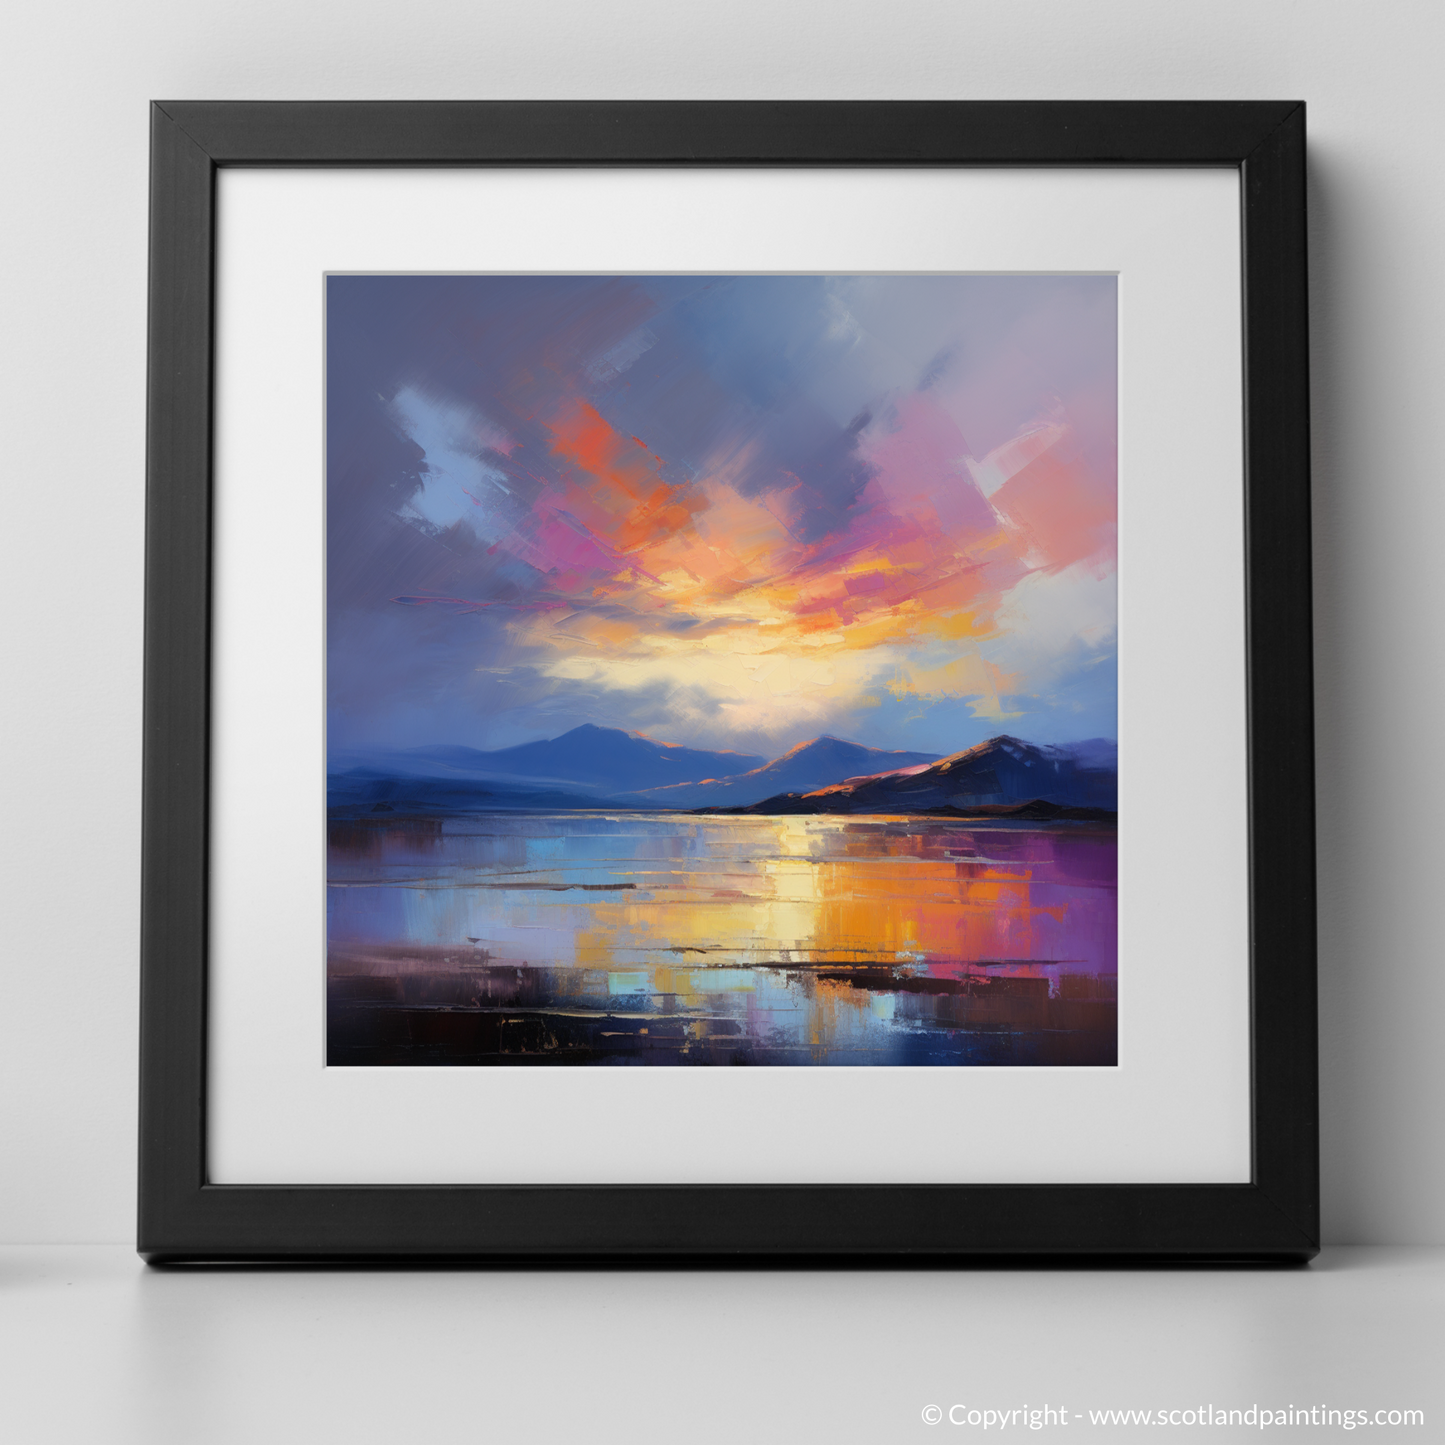 Art Print of A huge sky above Loch Lomond with a black frame